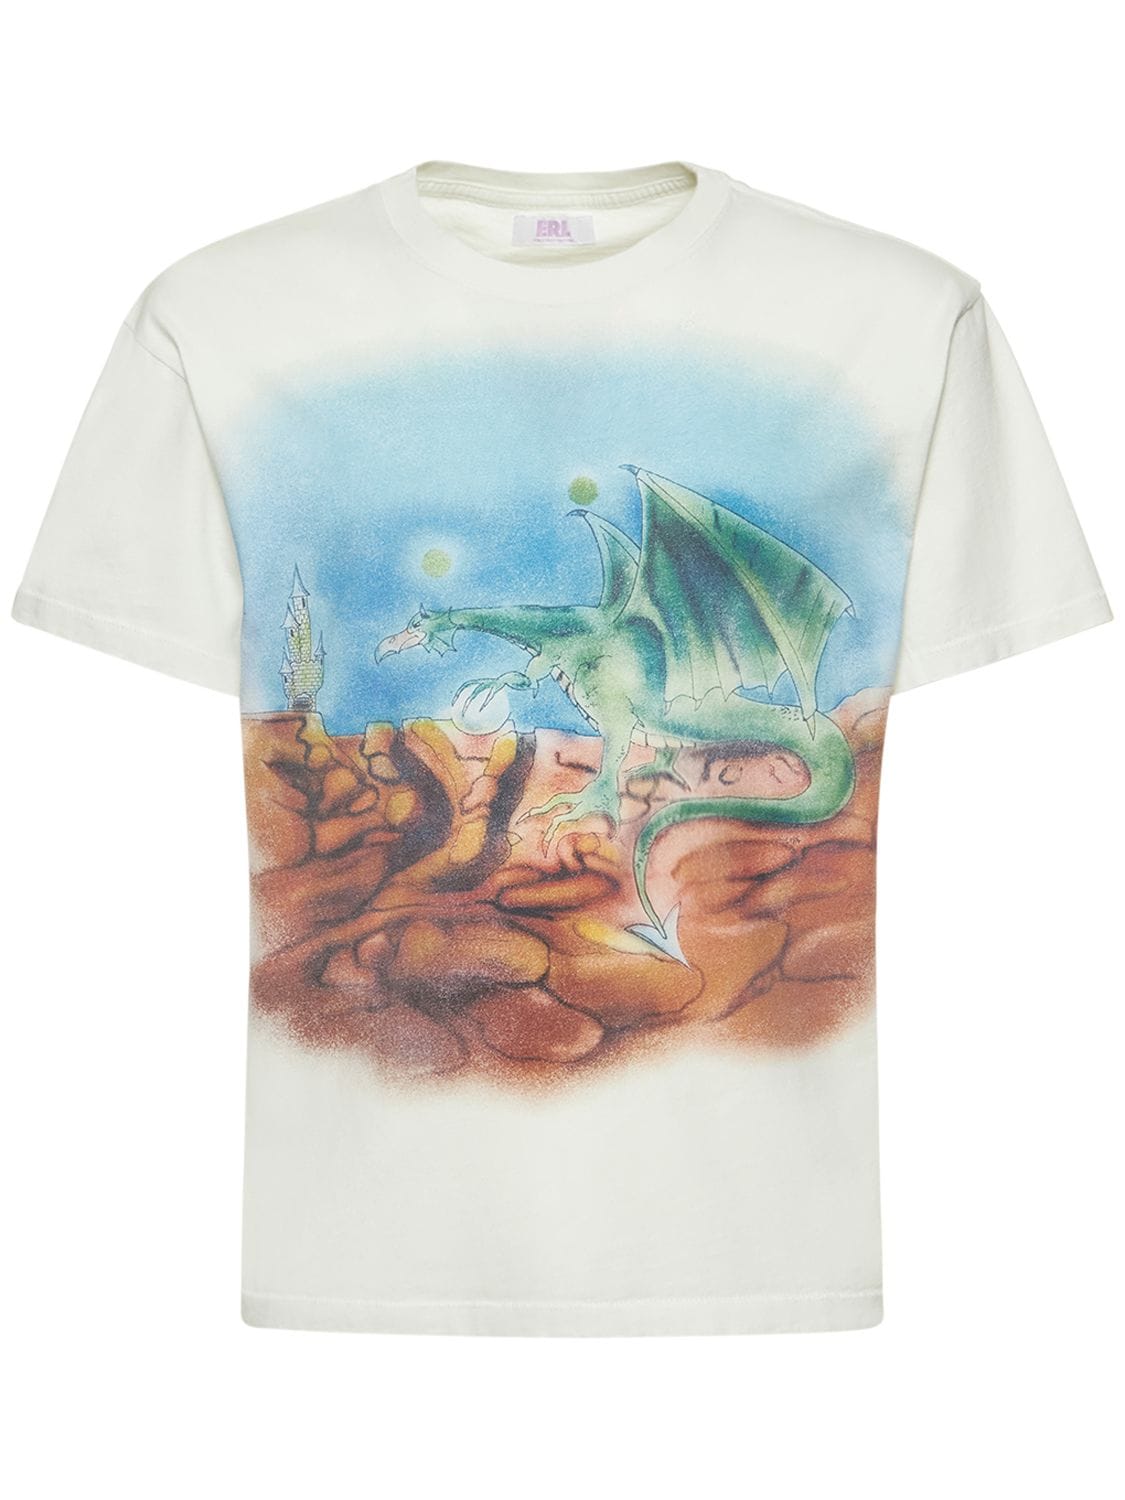 ERL Dragon Printed Cotton T-shirt